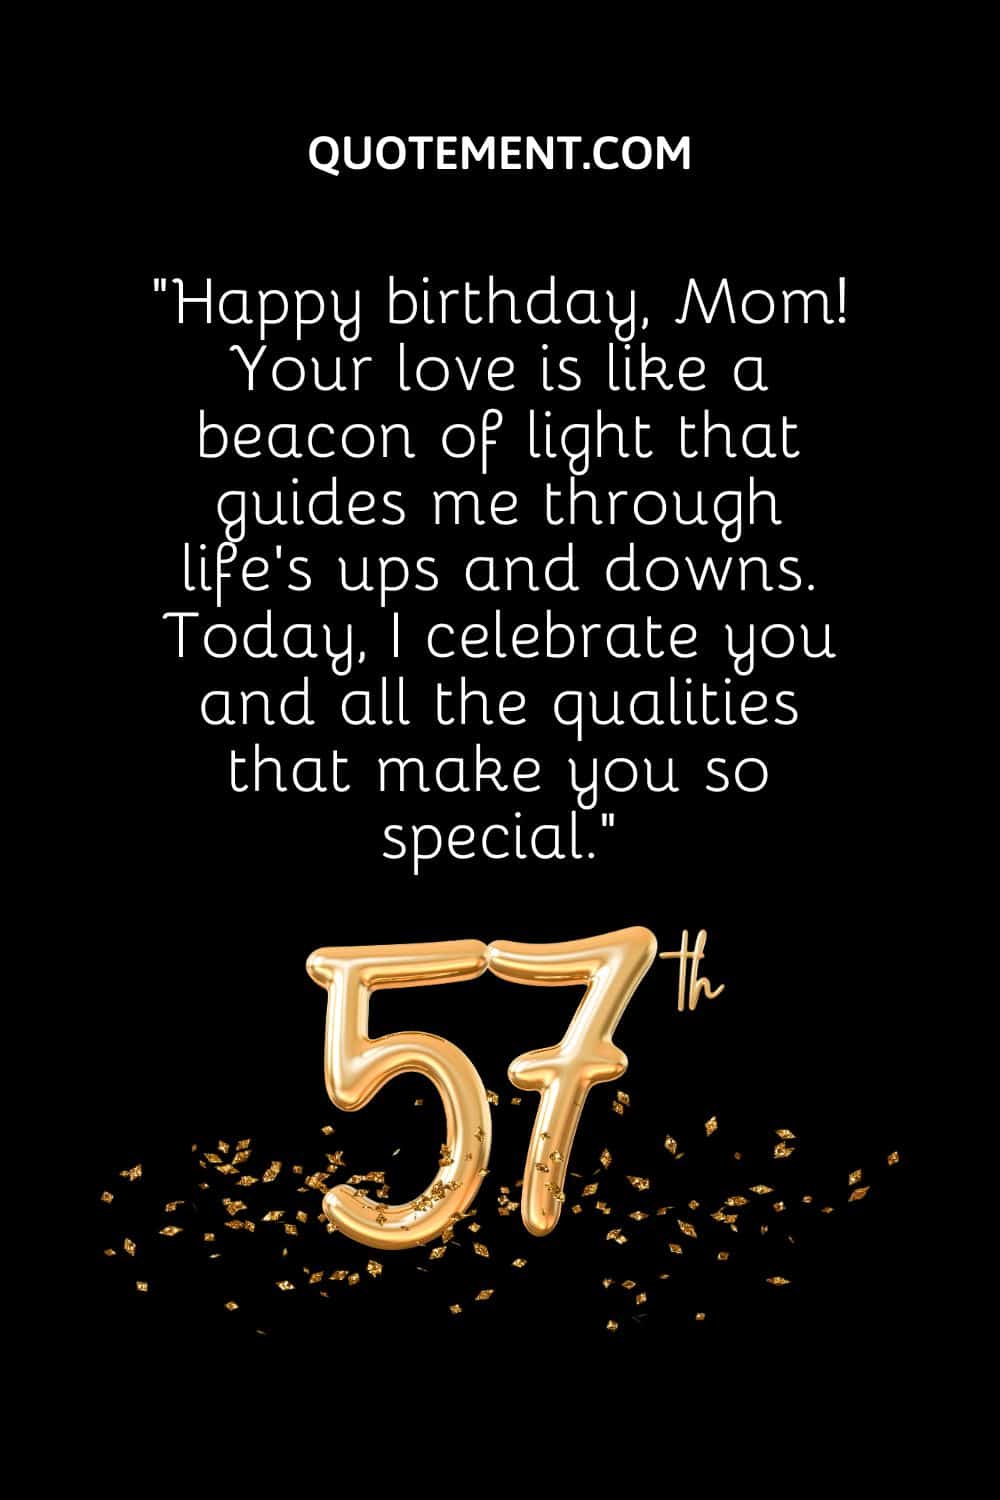 a golden 57-shaped birthday balloon
